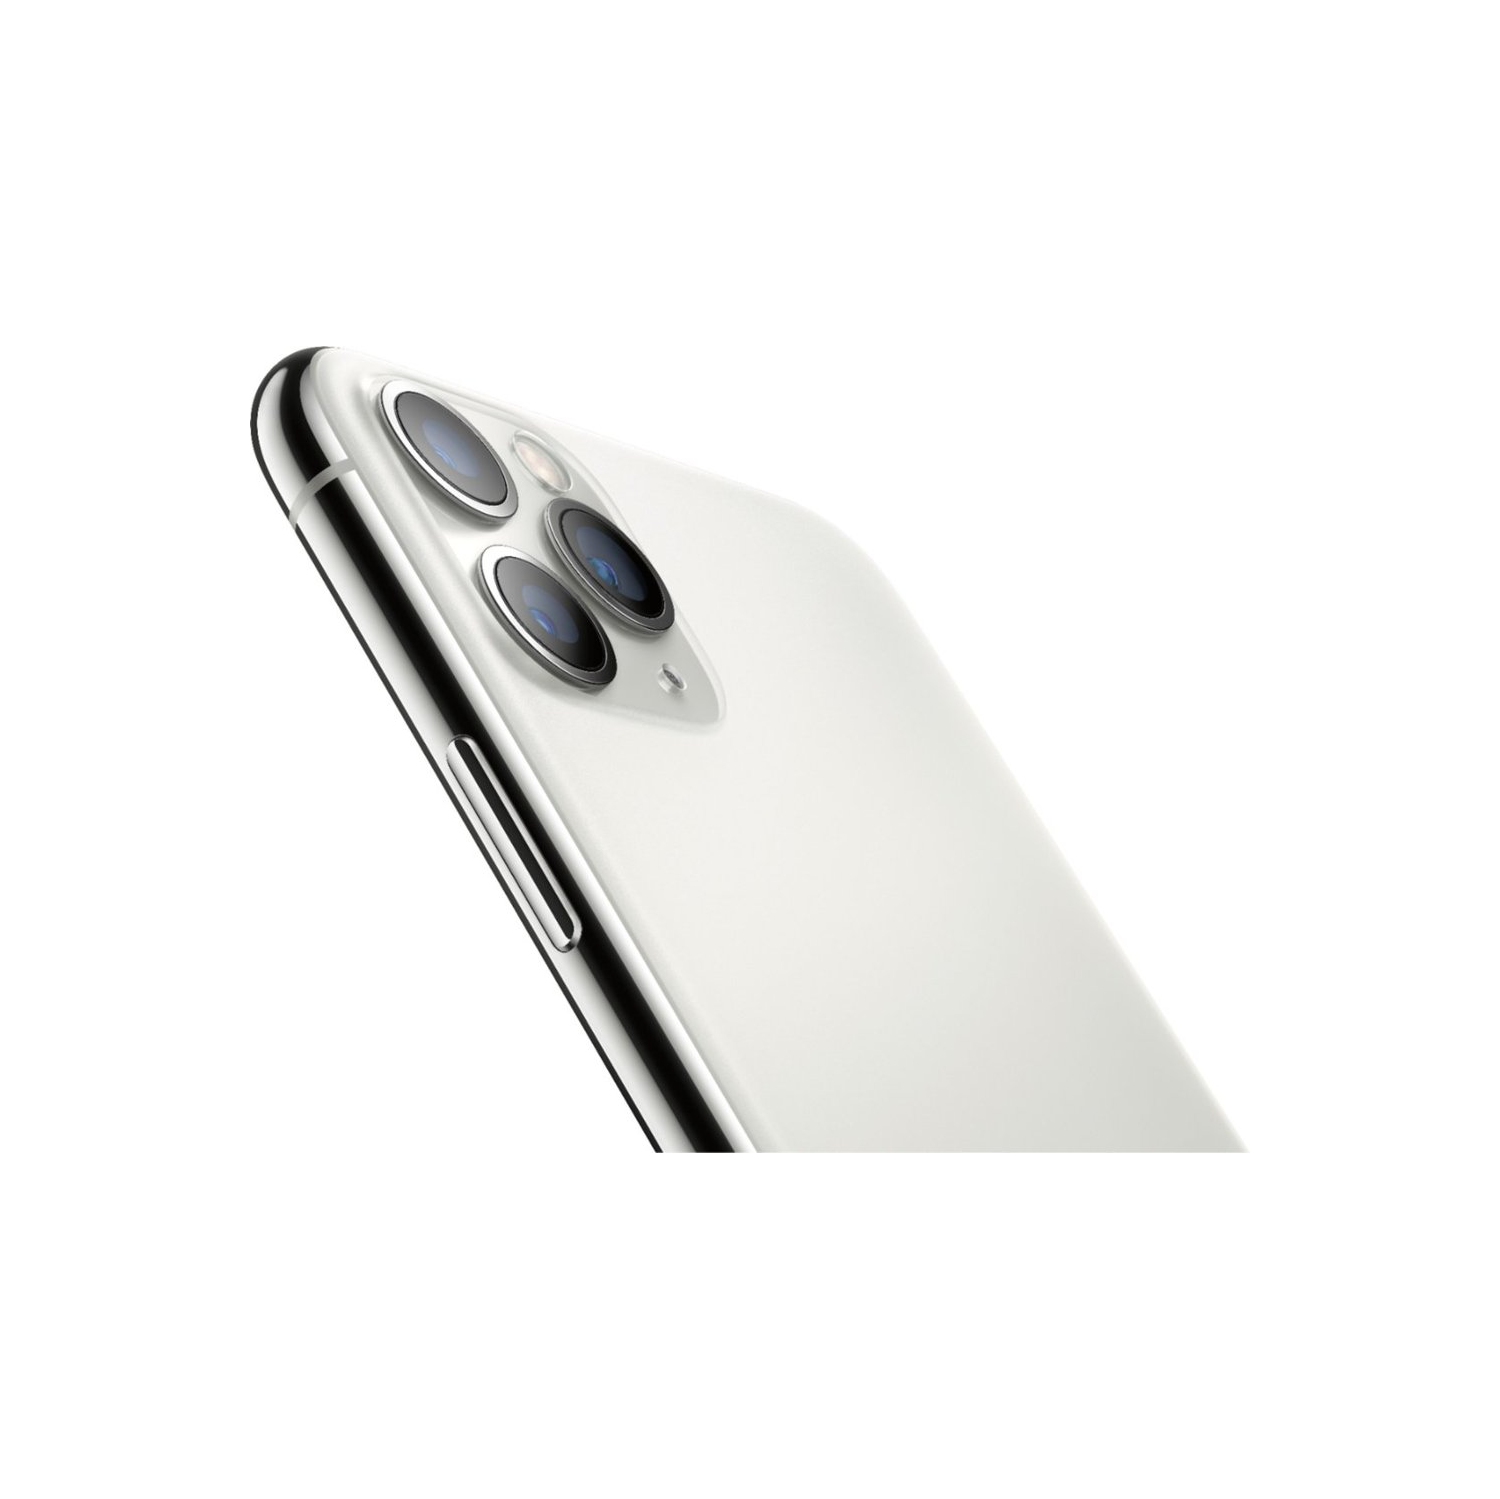 Apple iPhone 11 Pro Max 64GB Smartphone - Silver - Unlocked - Open Box |  Best Buy Canada